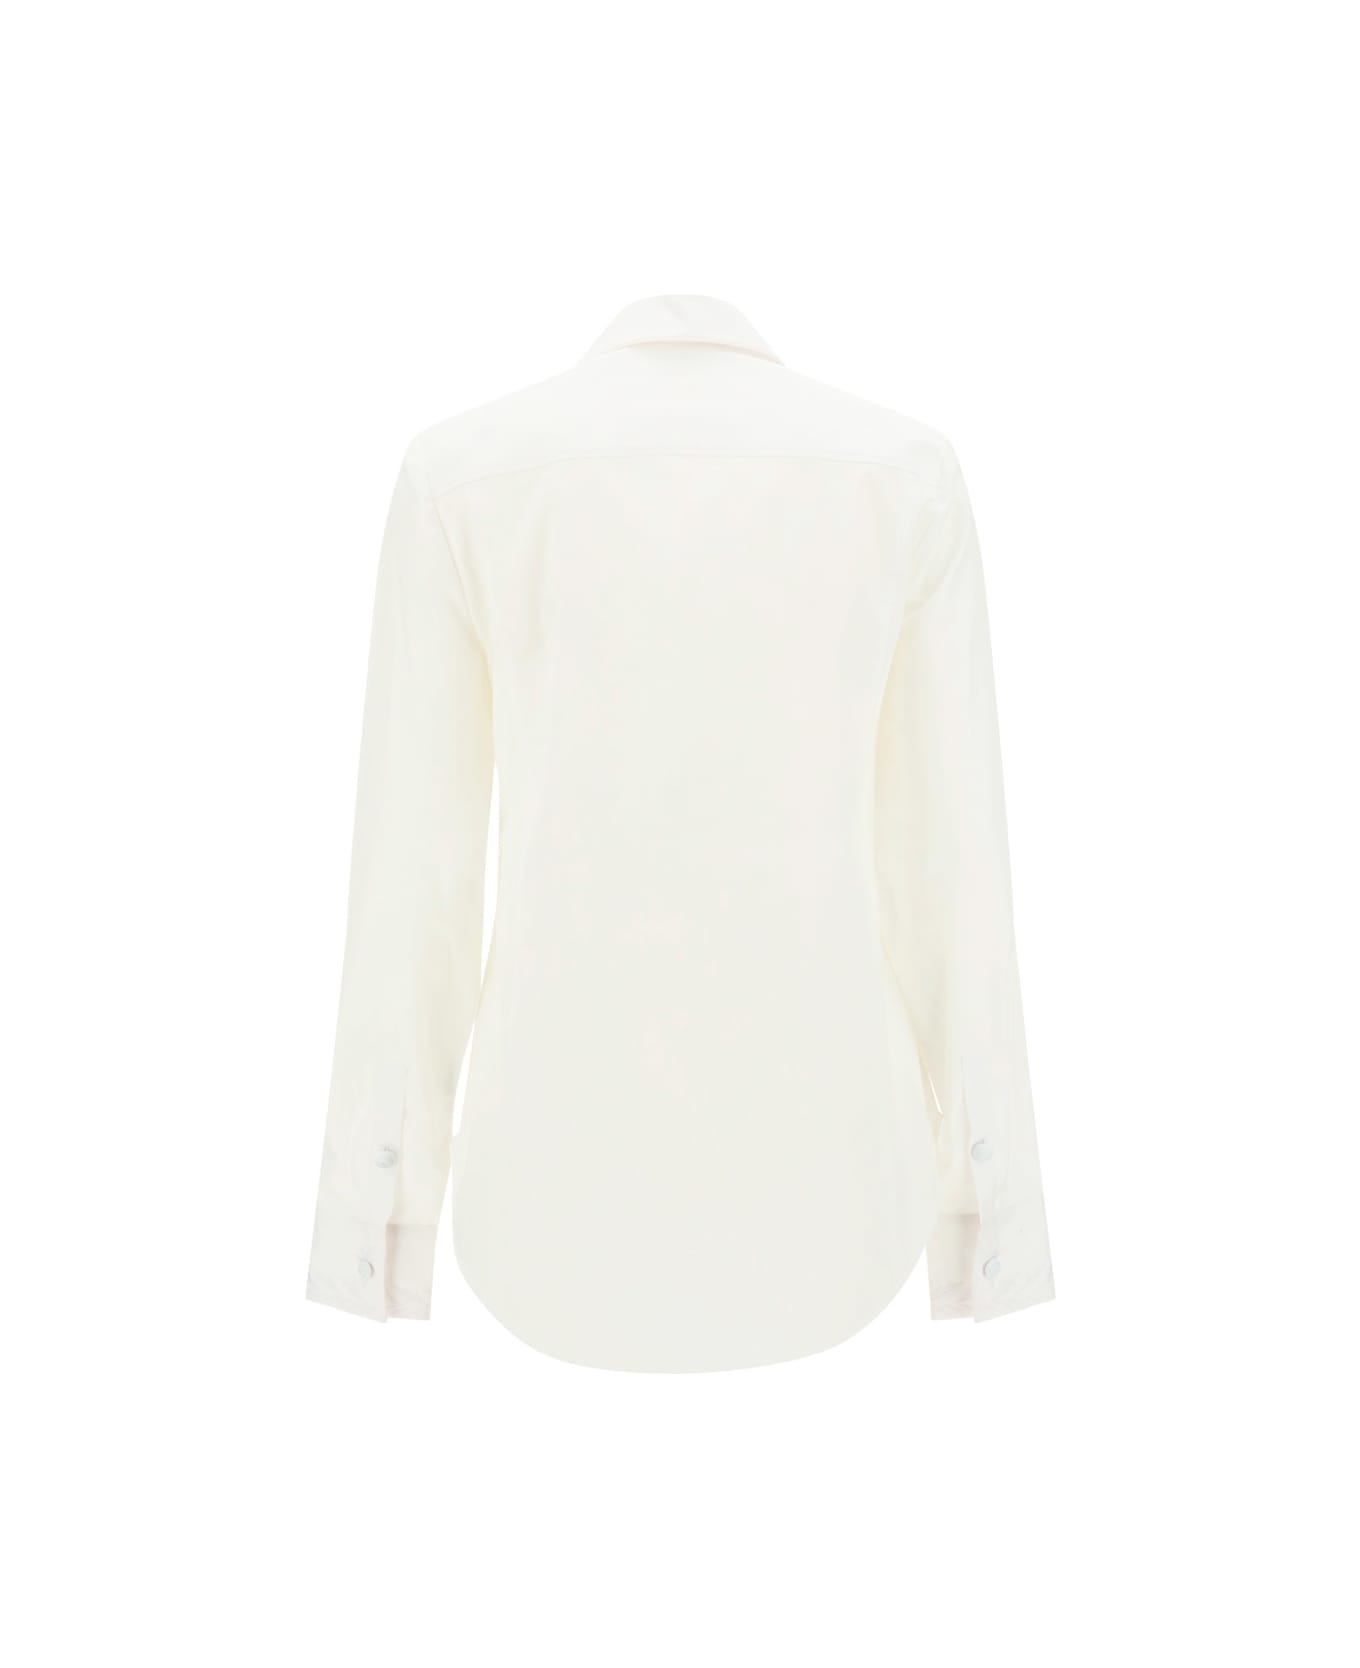 Paco Rabanne Shirt - White/white